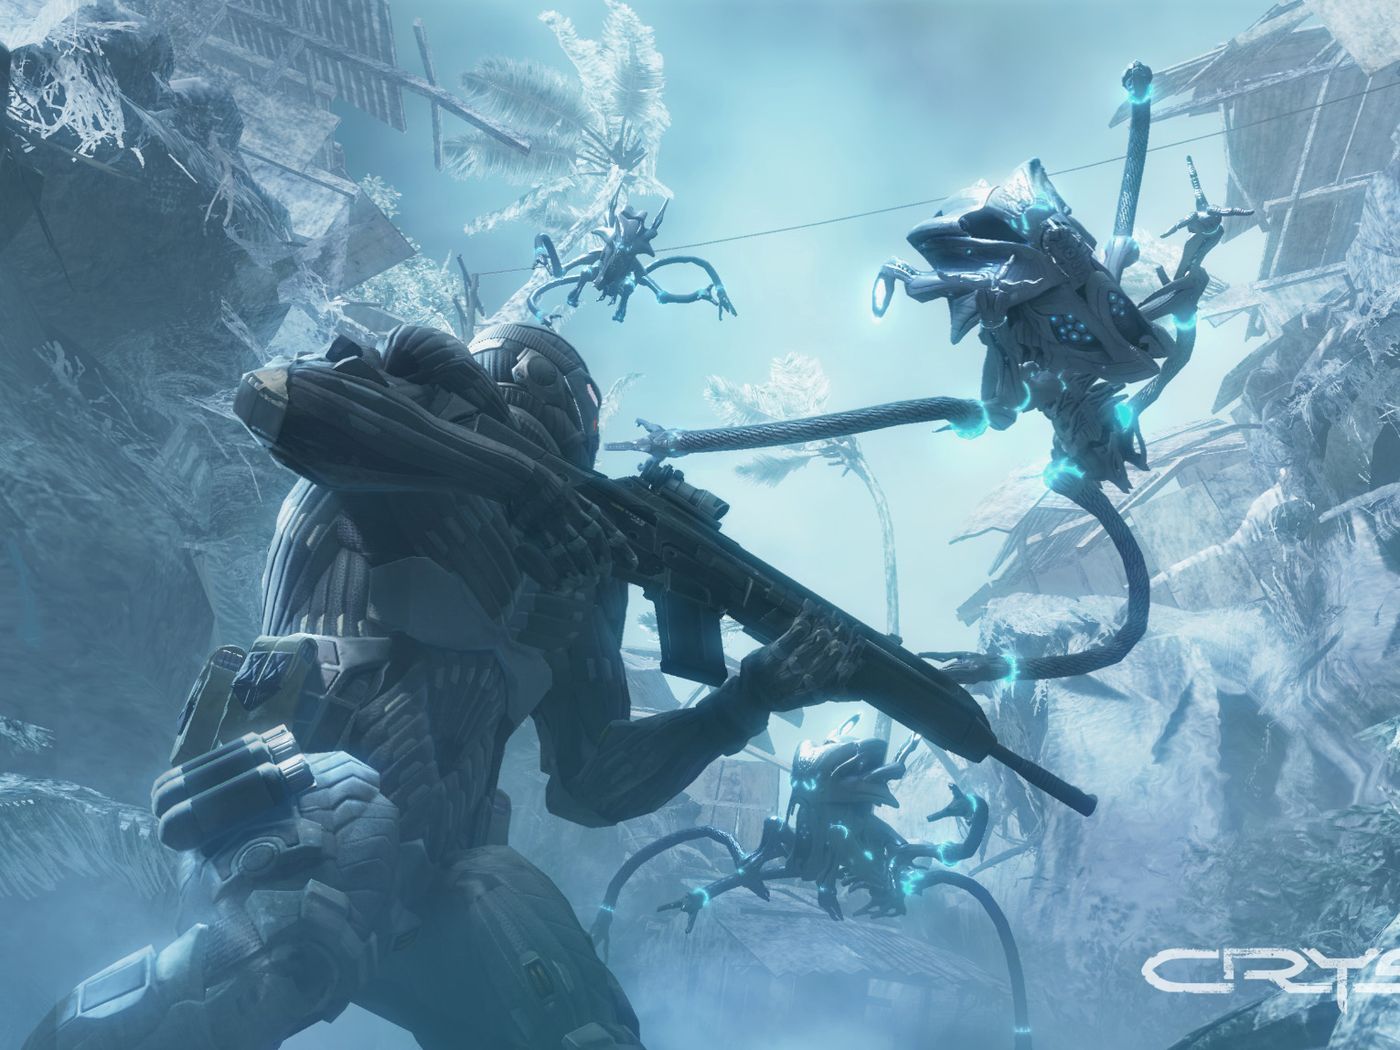 Crysis Remastered delayed after trailer leaks online